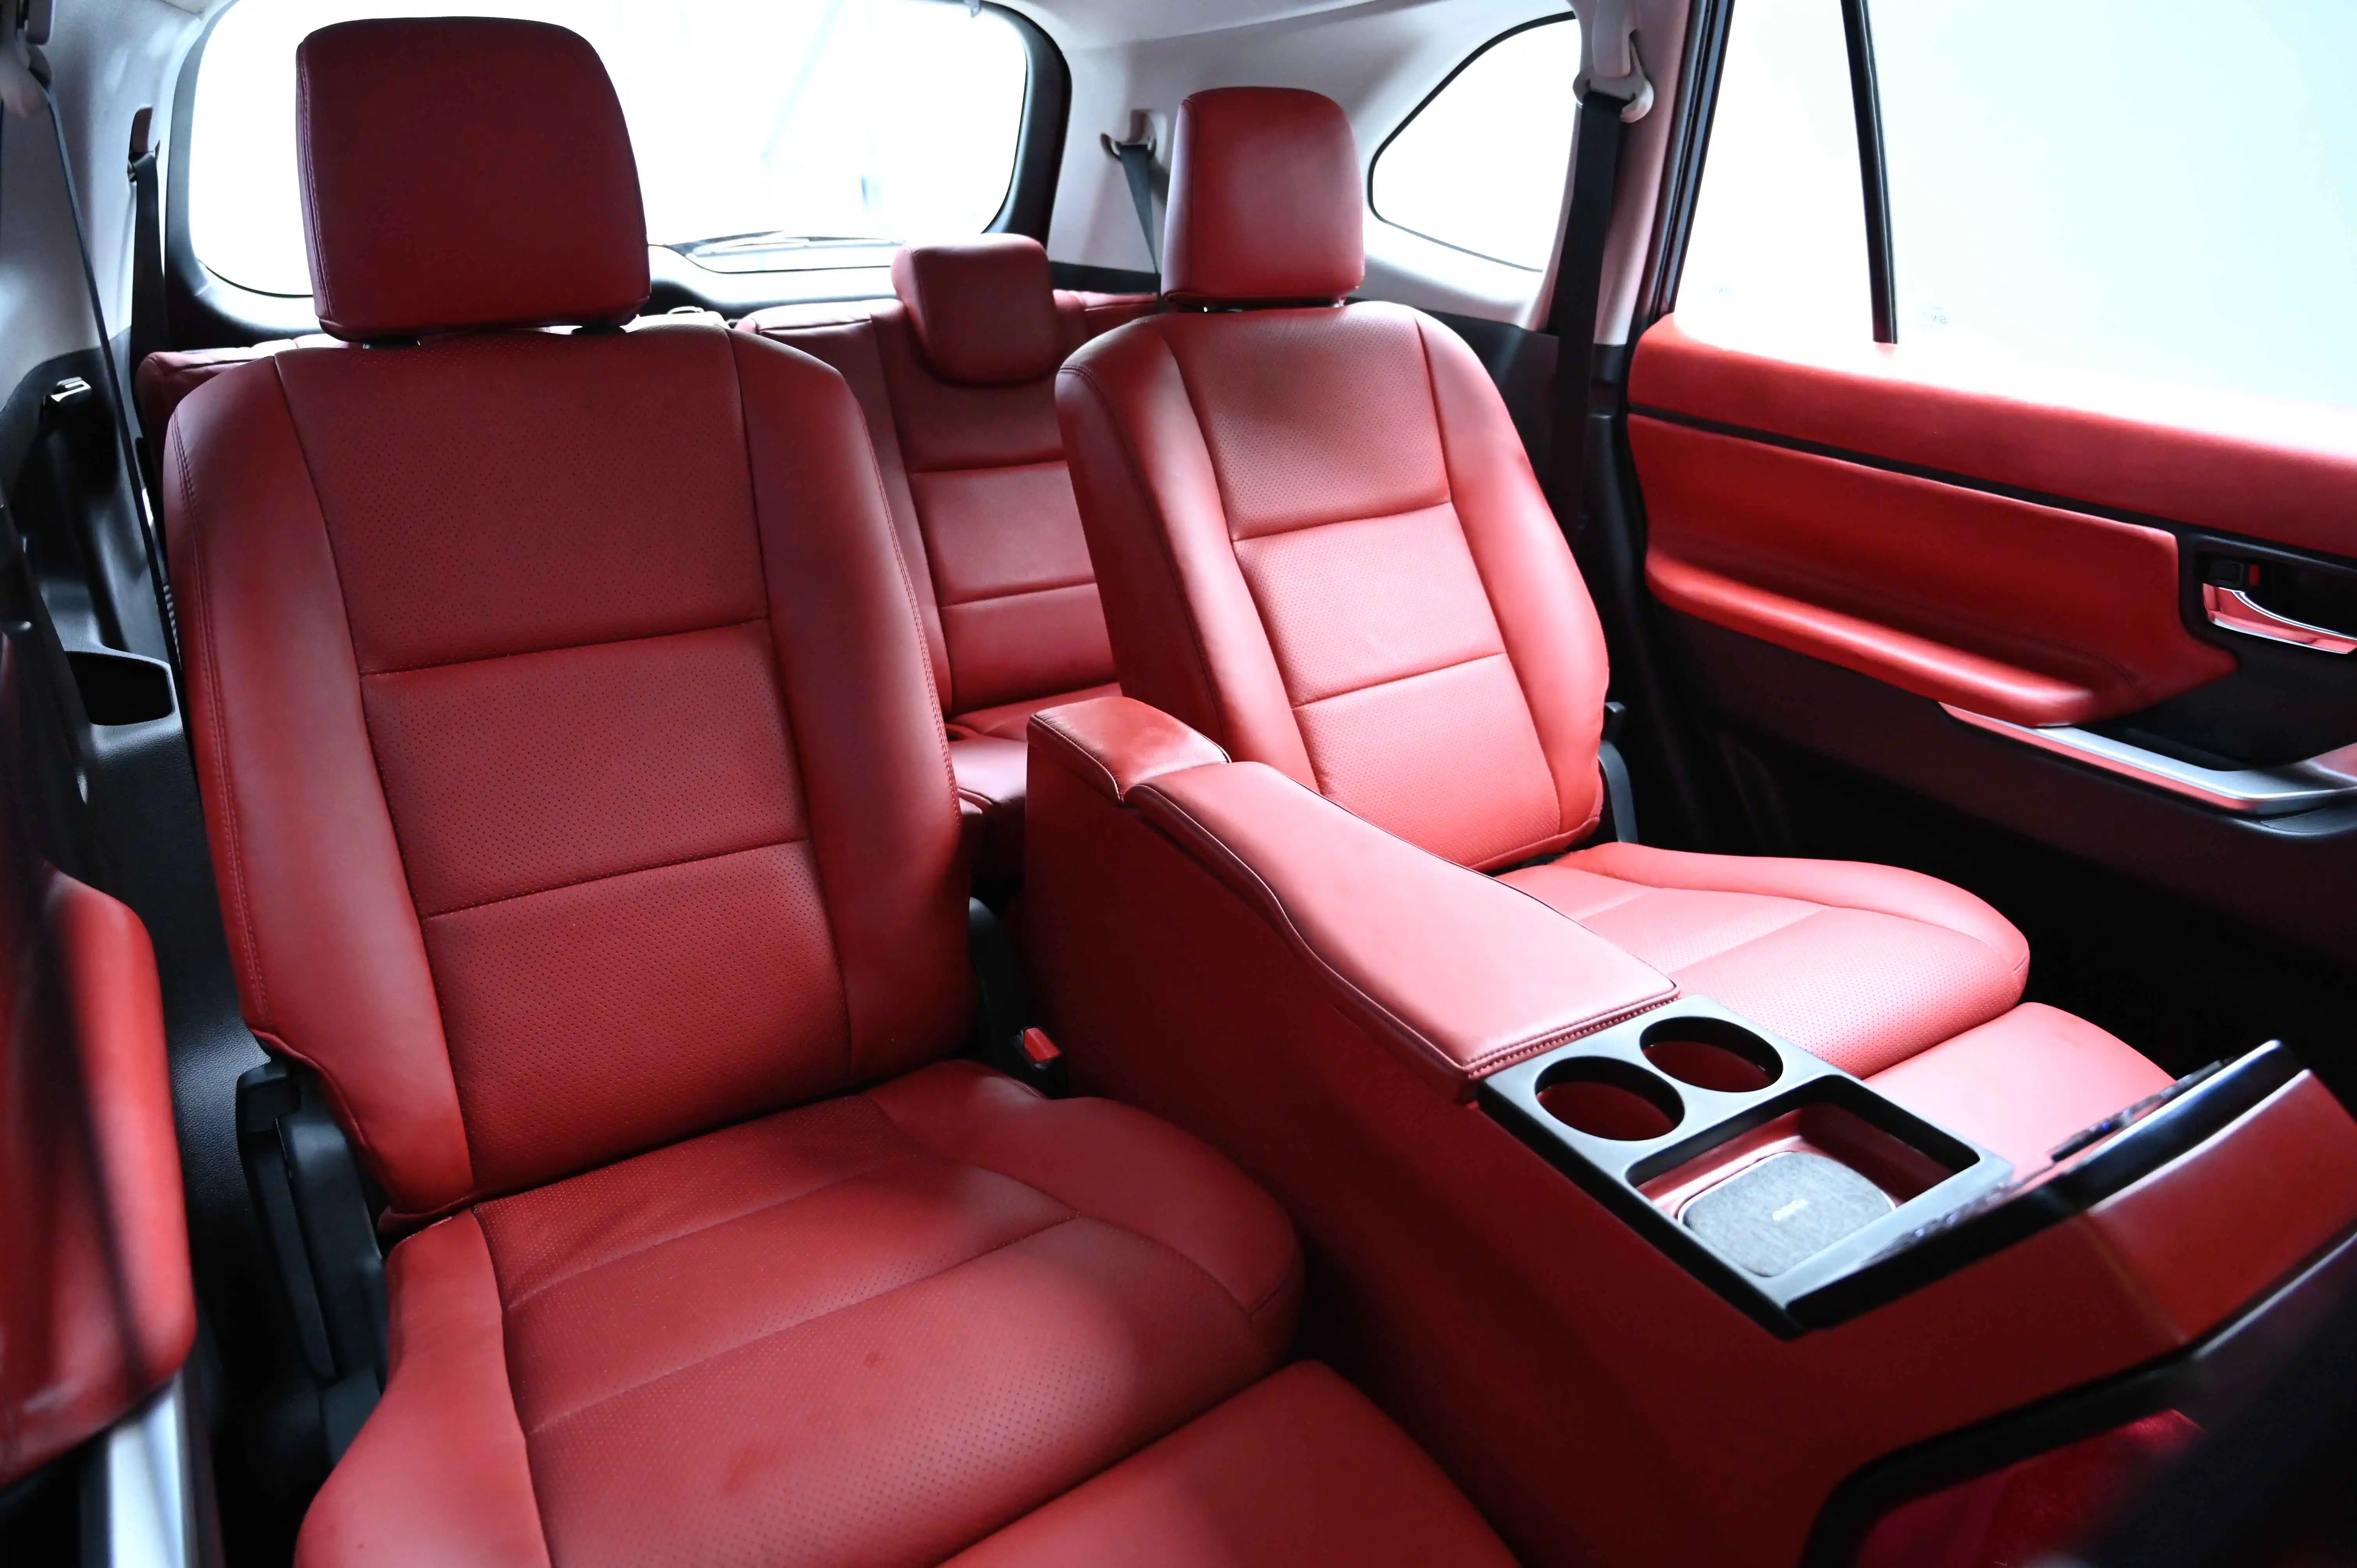 Best Innova Hycross car interior Recliners Seats customization